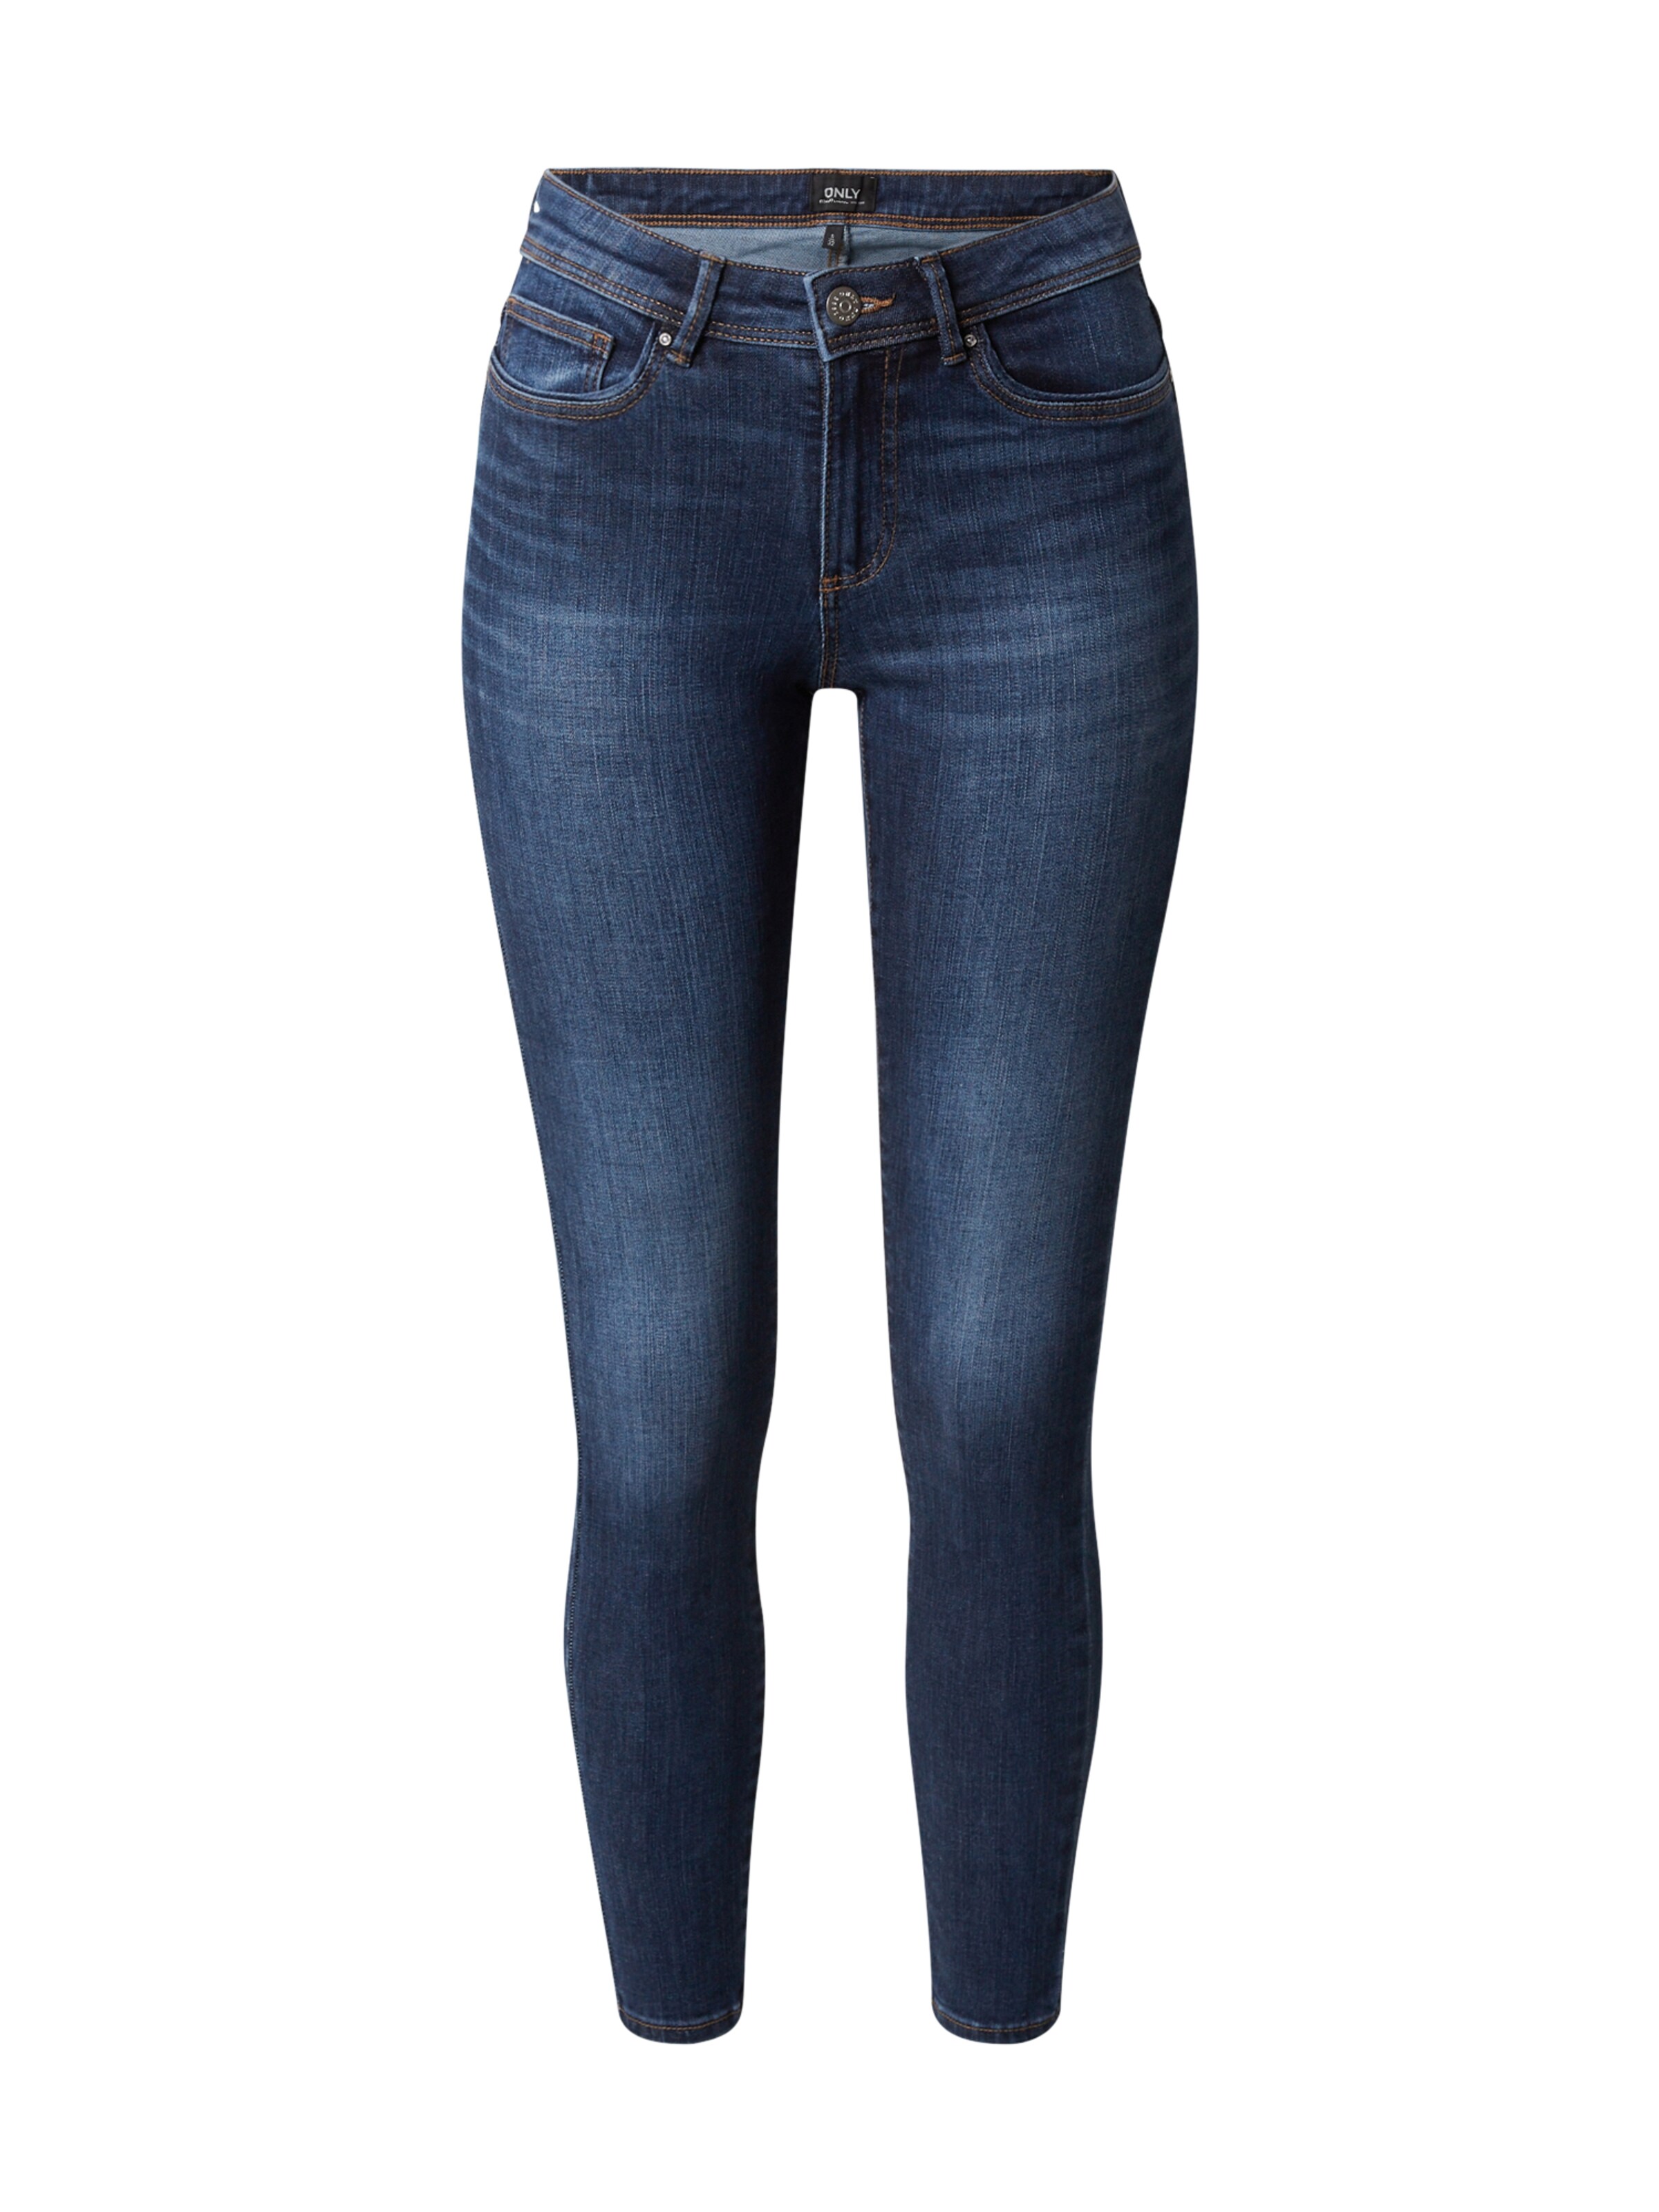 FRAME Denim Andere materialien jeans in Blau Damen Bekleidung Jeans Schlagjeans 